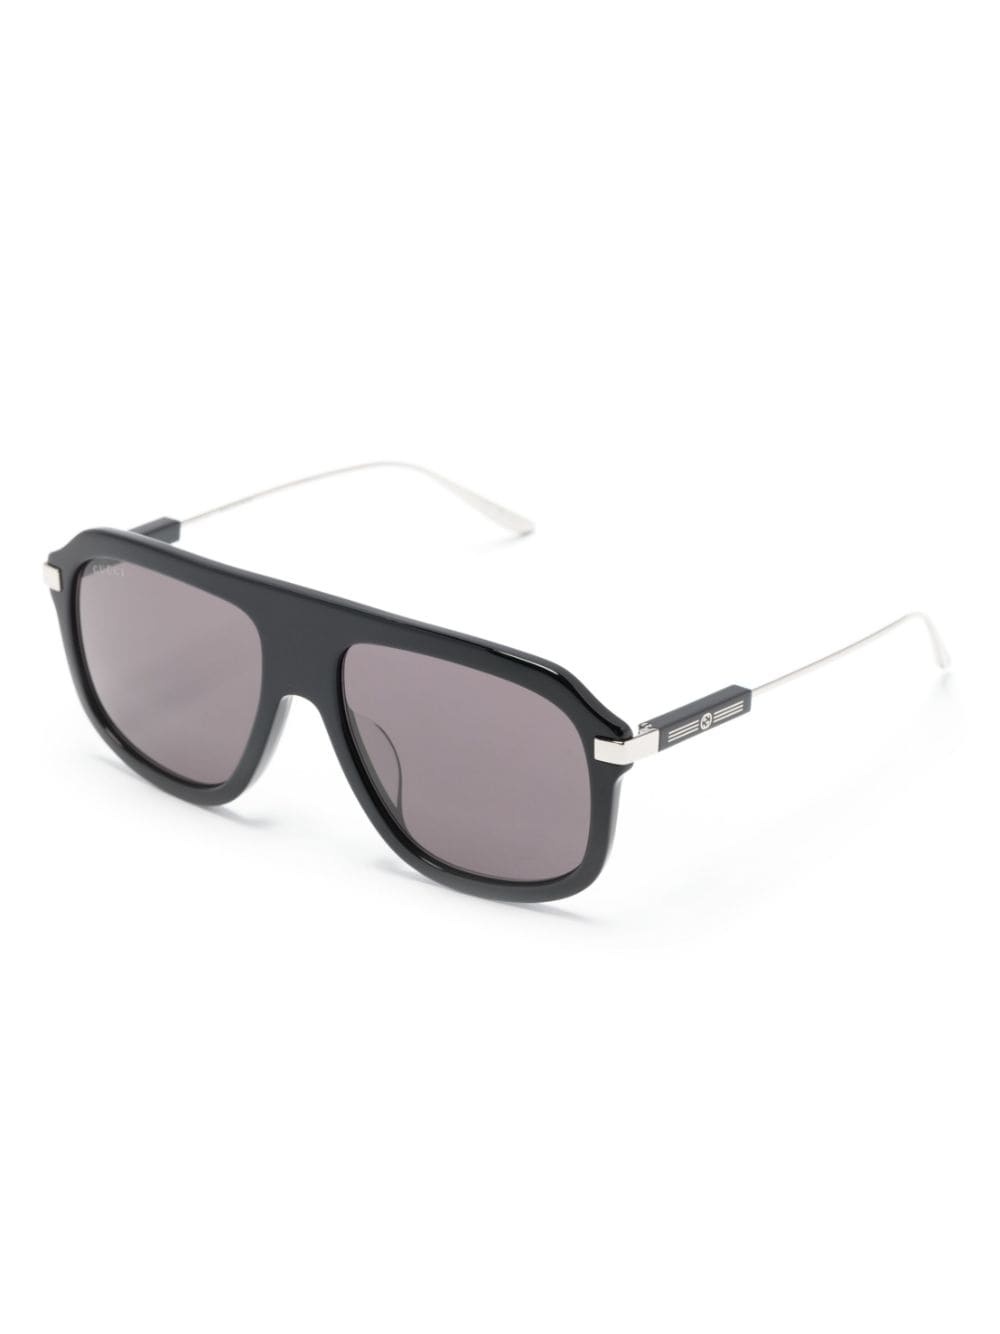 pilot-frame acetate sunglasses - 2